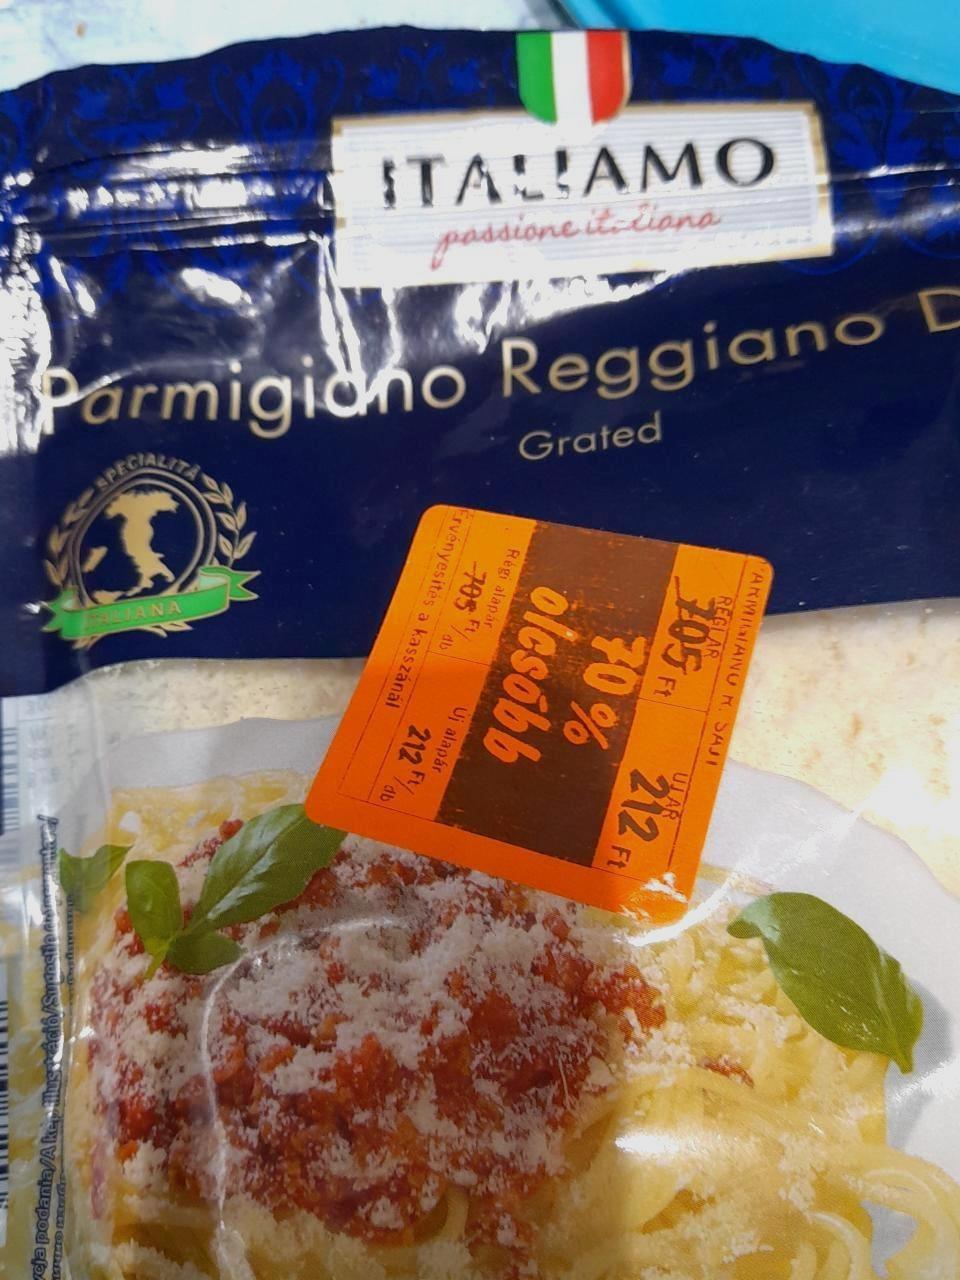 Képek - Parmigiano Reggiano D.O.P Italiamo